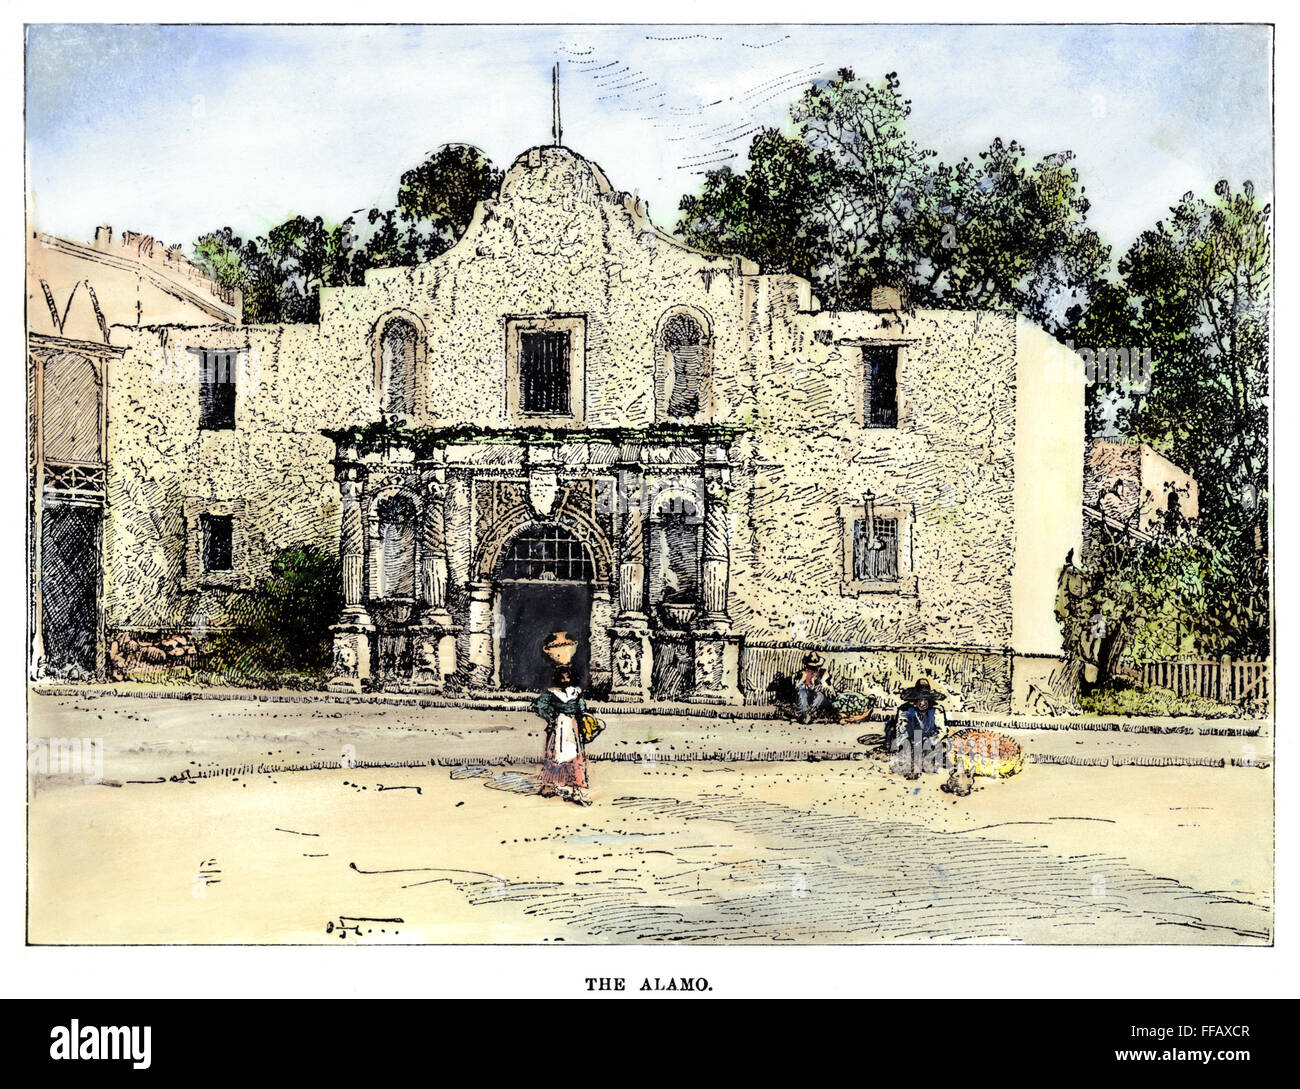 TEXAS: ALAMO, 1900. /nThe Alamo in San Antonio: farbige Linie Gravur, 1900. Stockfoto